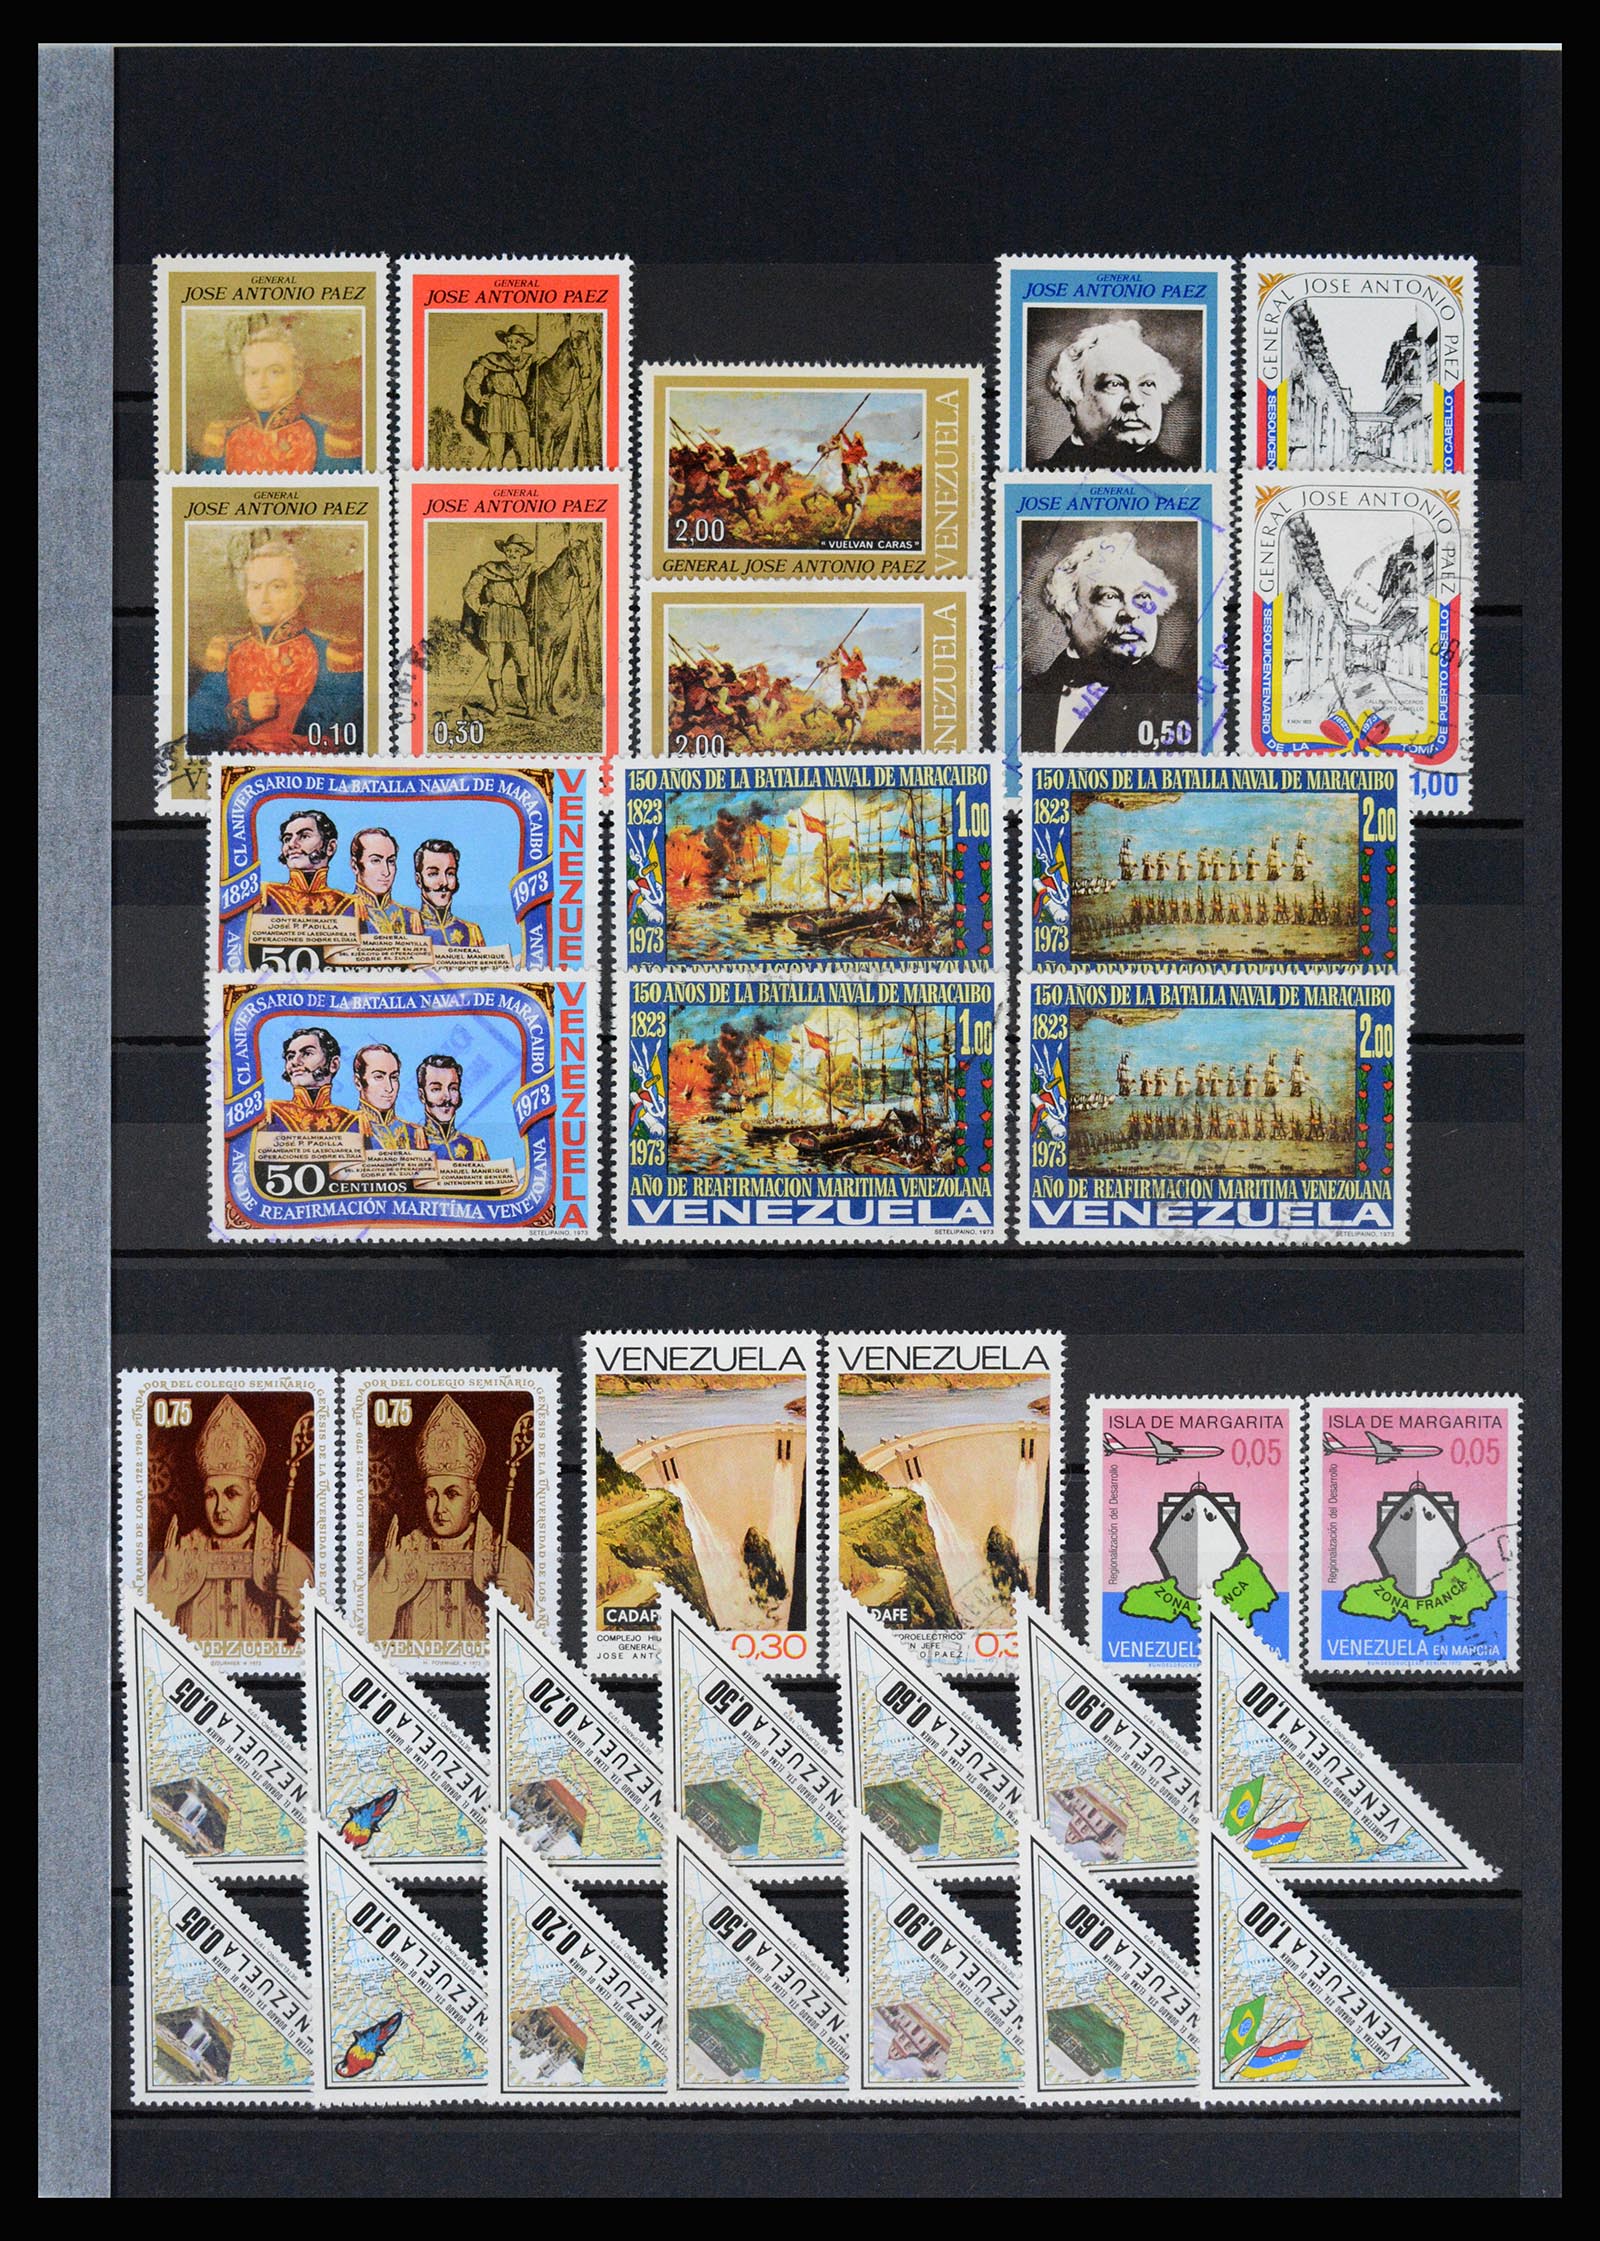 36987 066 - Stamp collection 36987 Venezuela 1860-1995.